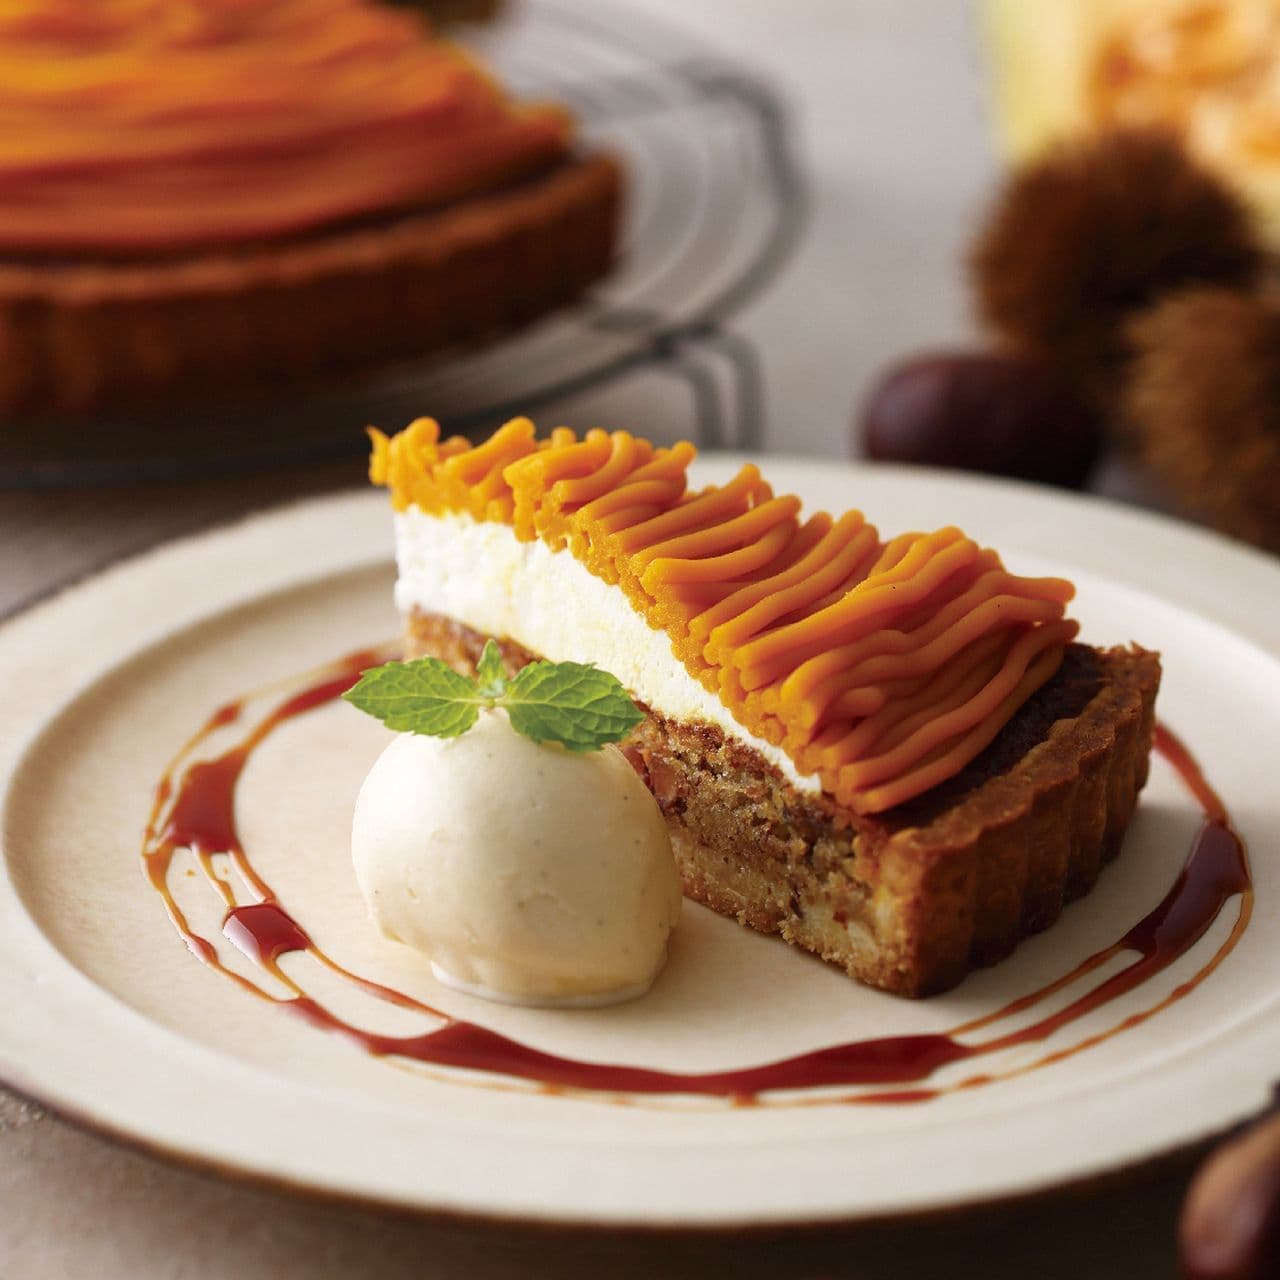 KIHACHI Cafe "Chestnut and Pumpkin Tart with Vanilla Ice Cream